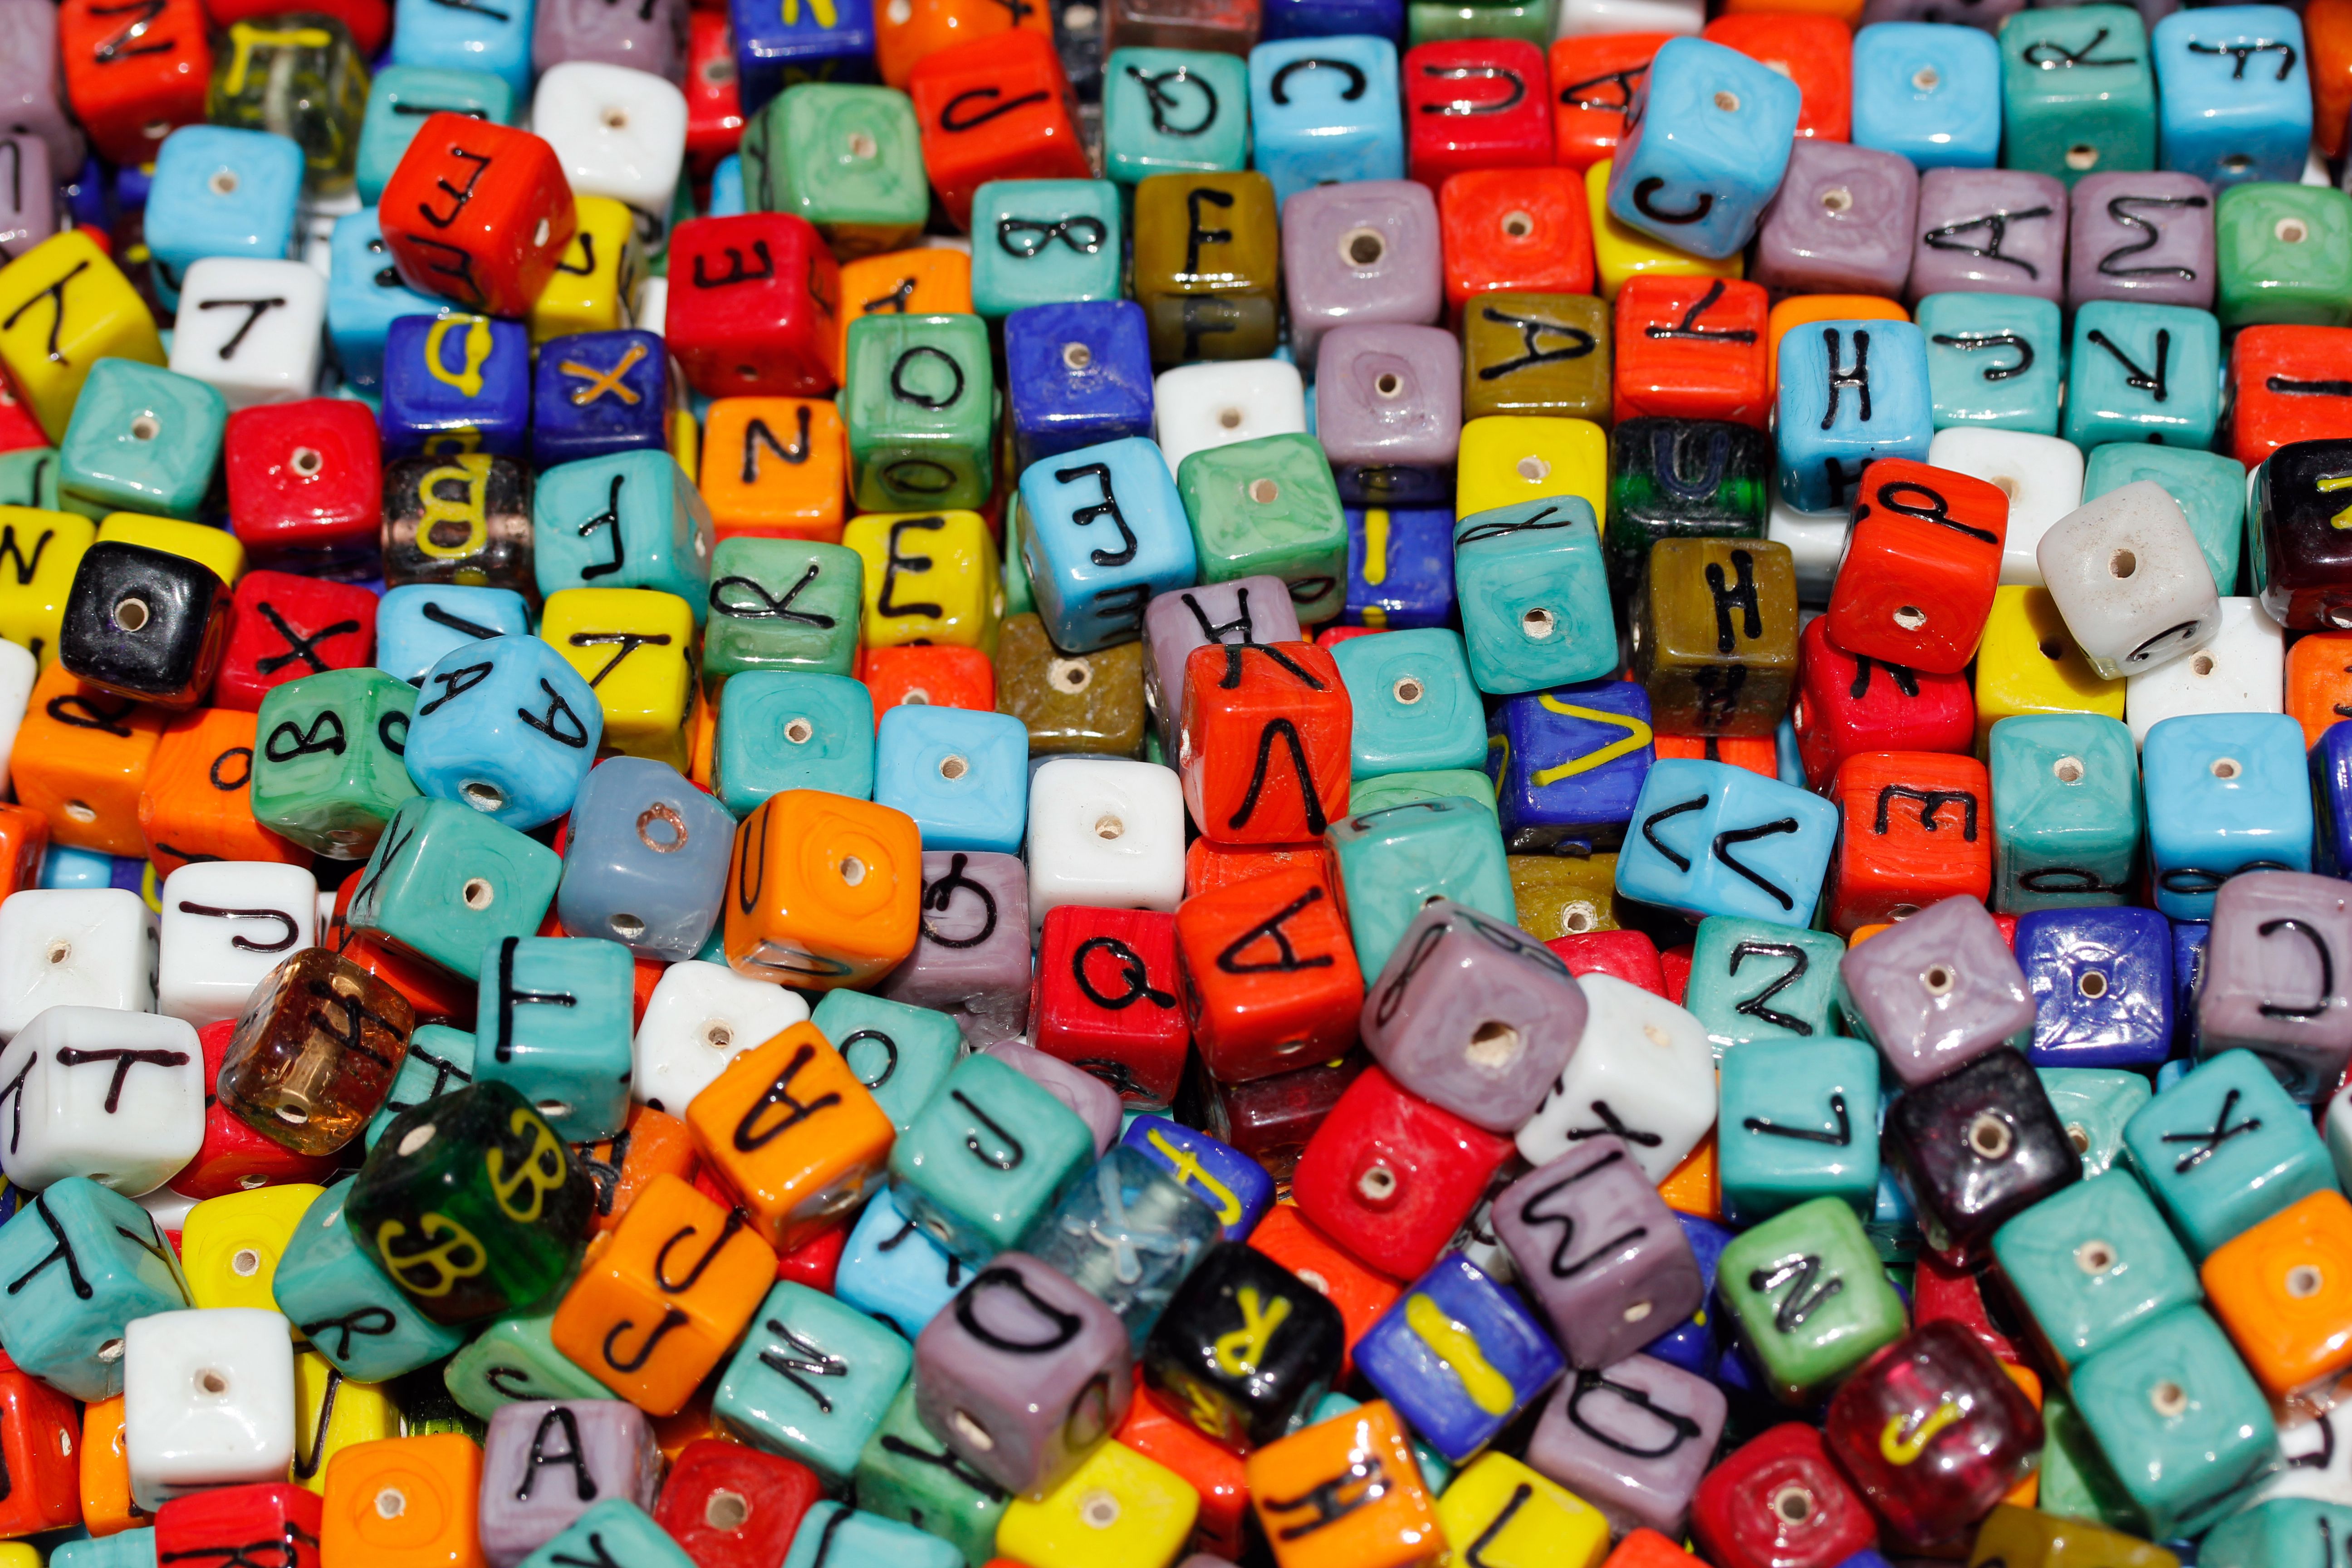 English Alphabets Cubes Links. Free Image and Photo